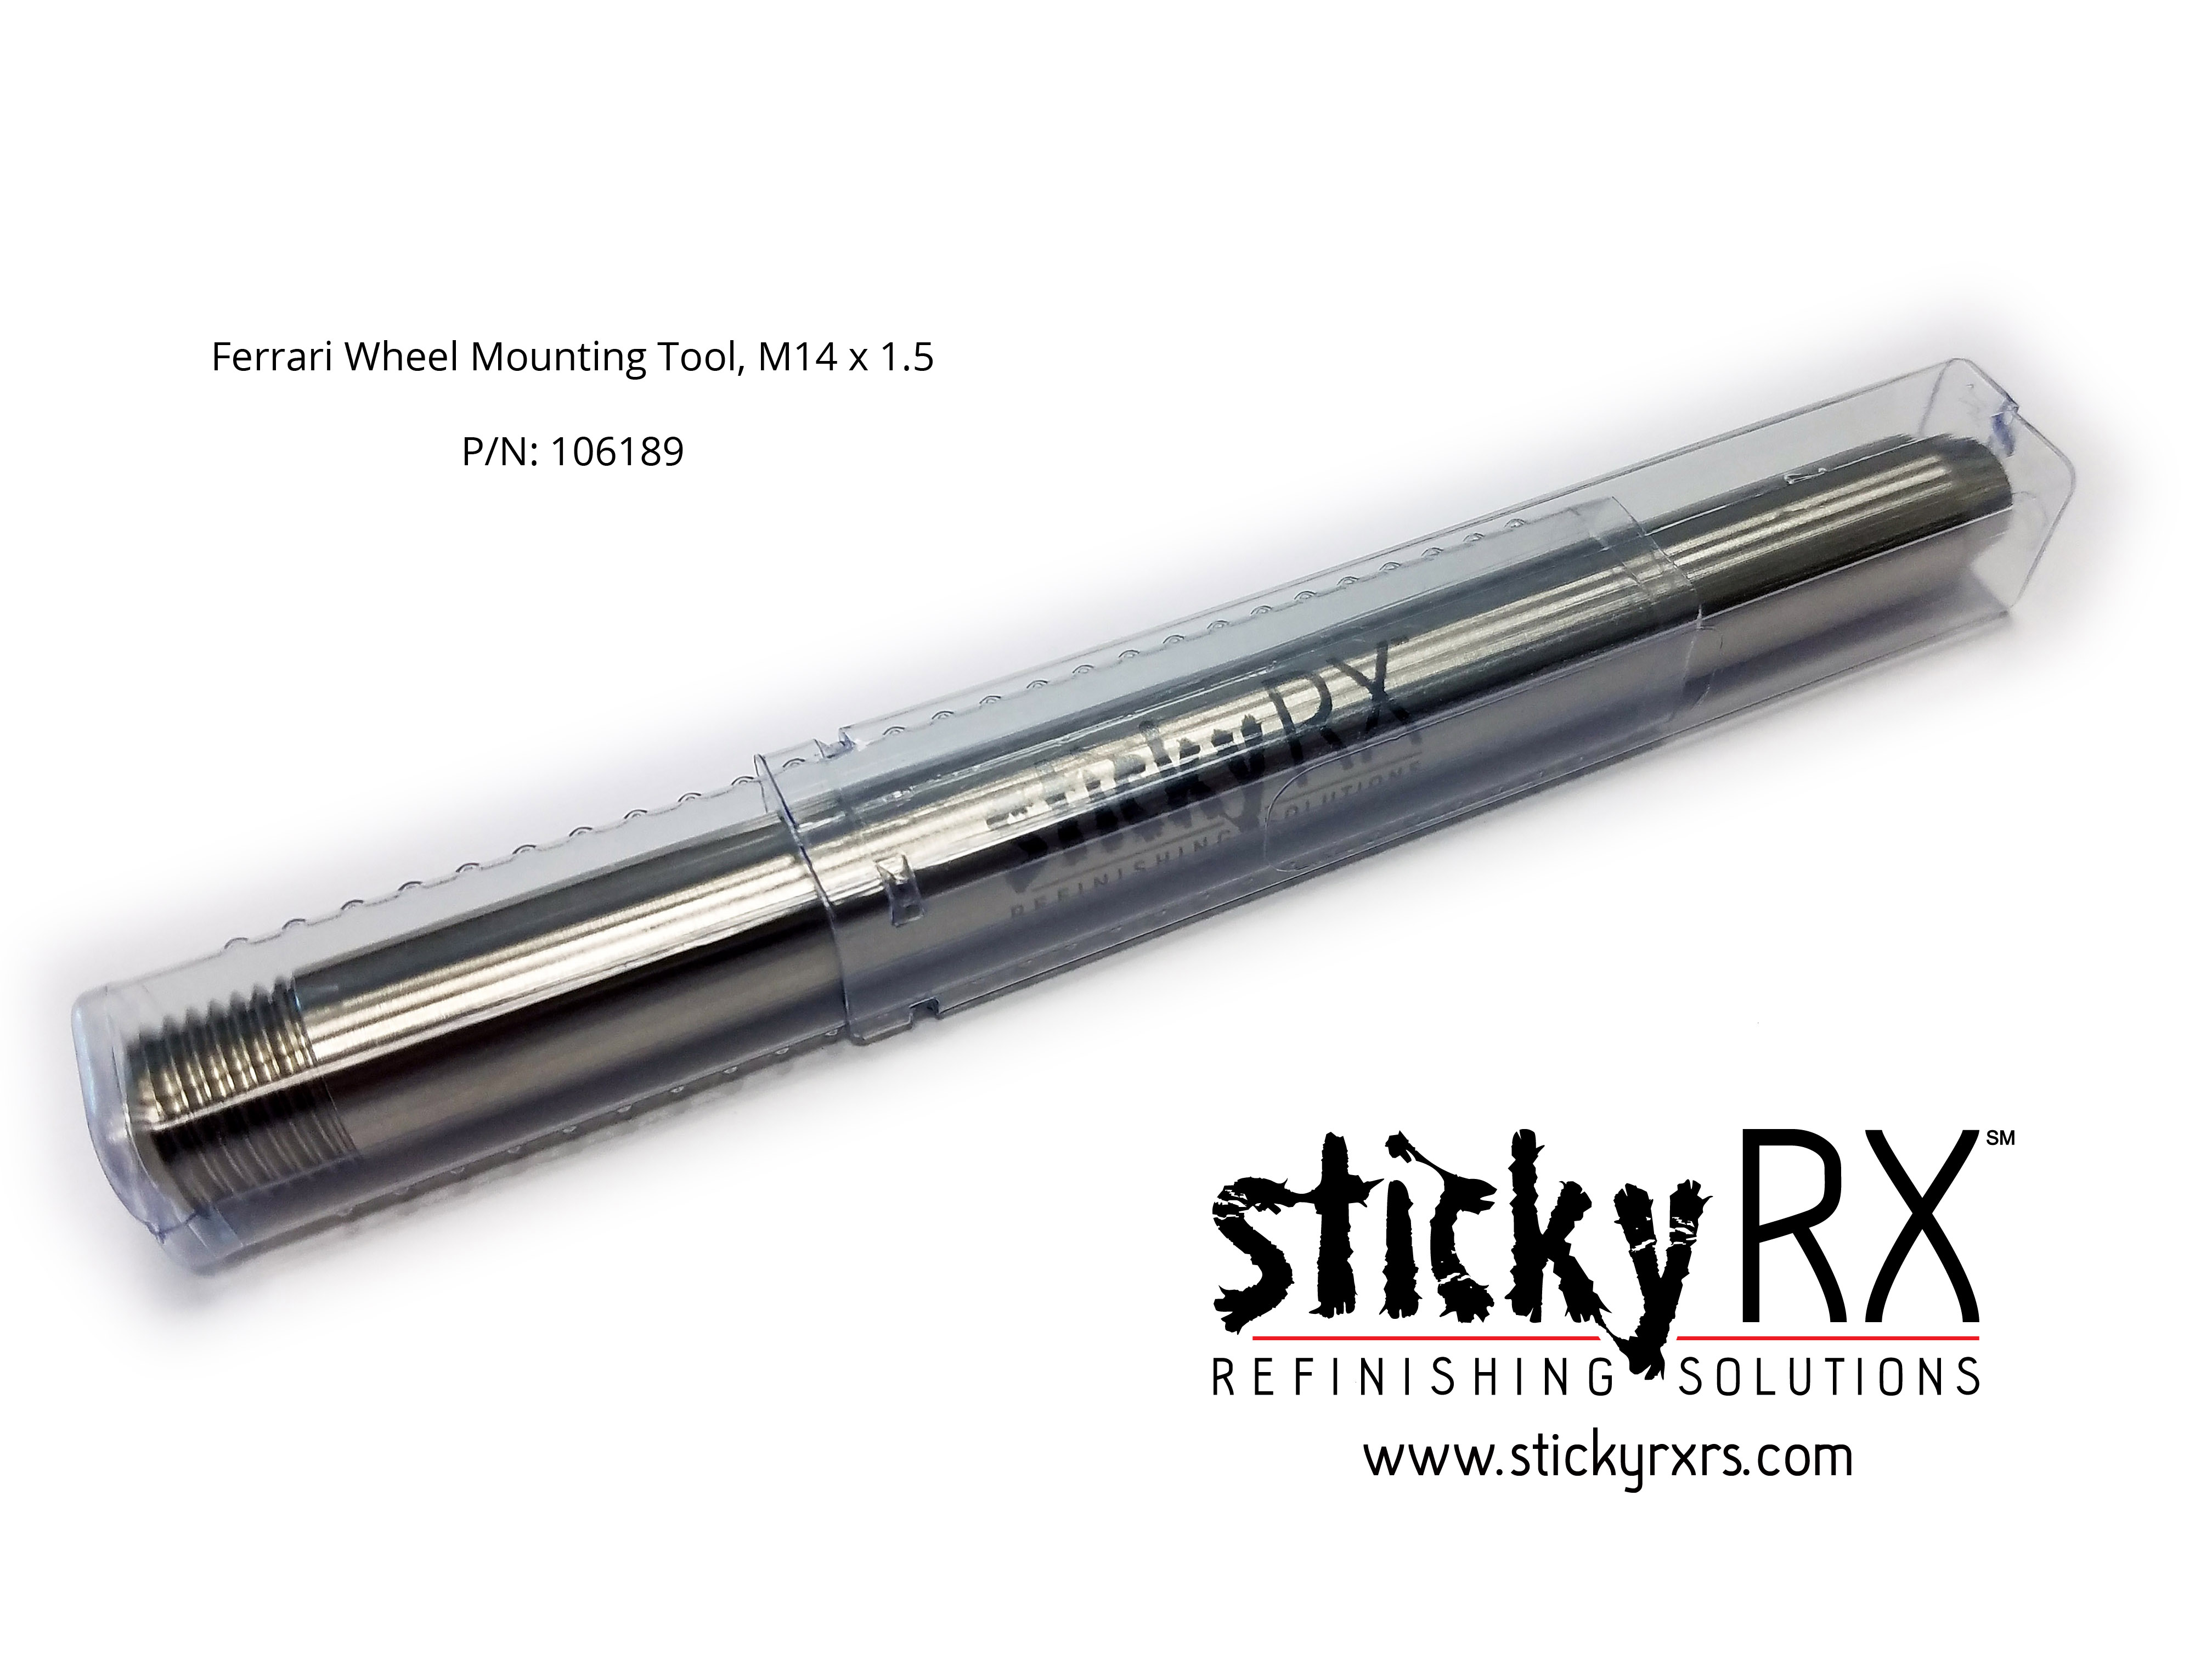 Sticky RX Refinishing Solutions Ferrari Wheel Mounting Tool 03